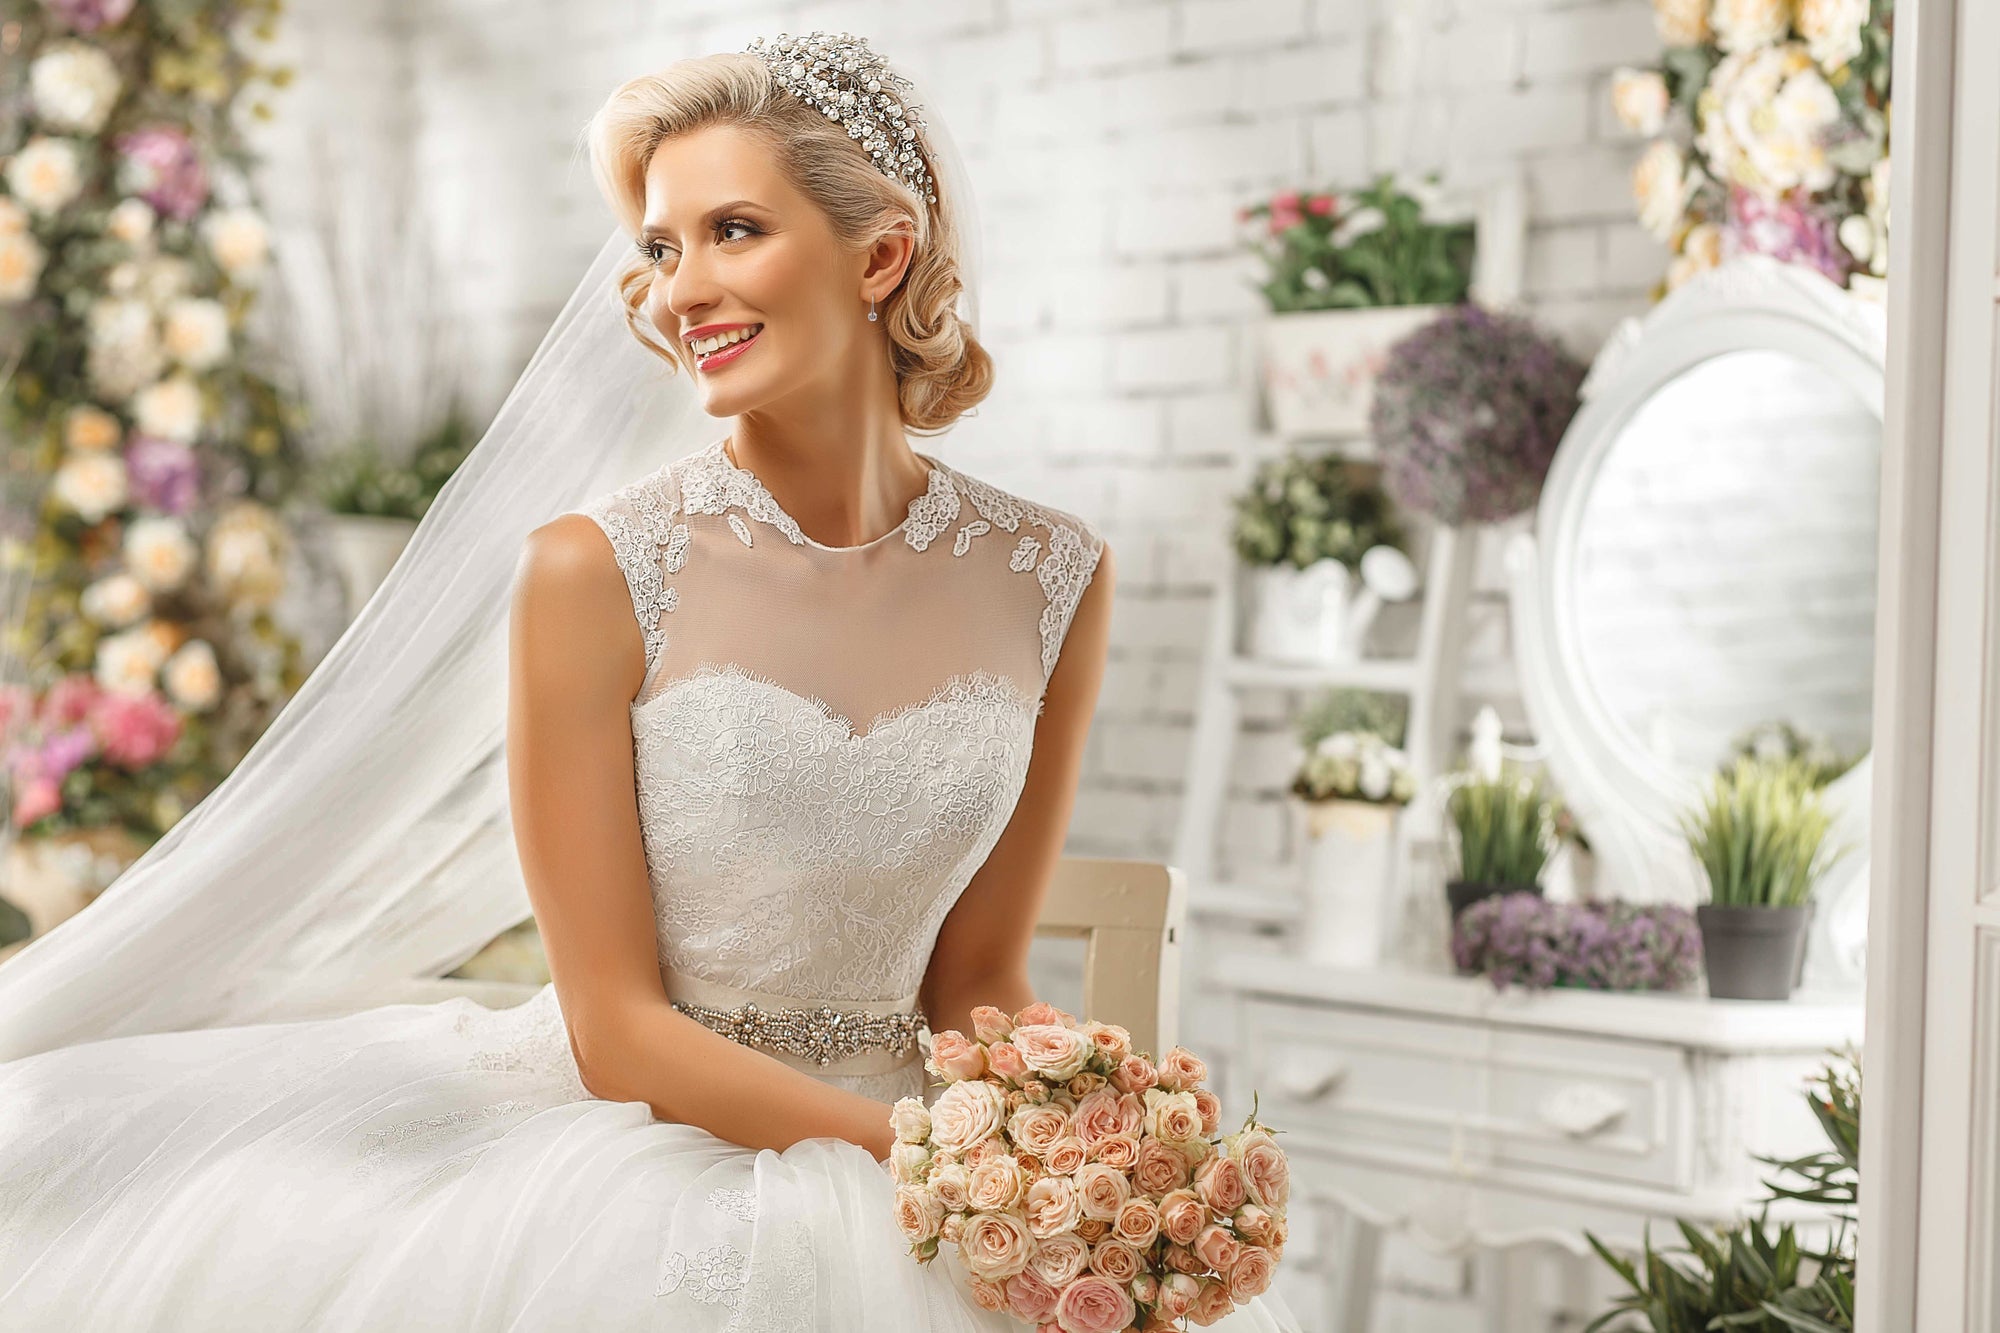 Bridal Jewelry & Bridesmaids Gifts